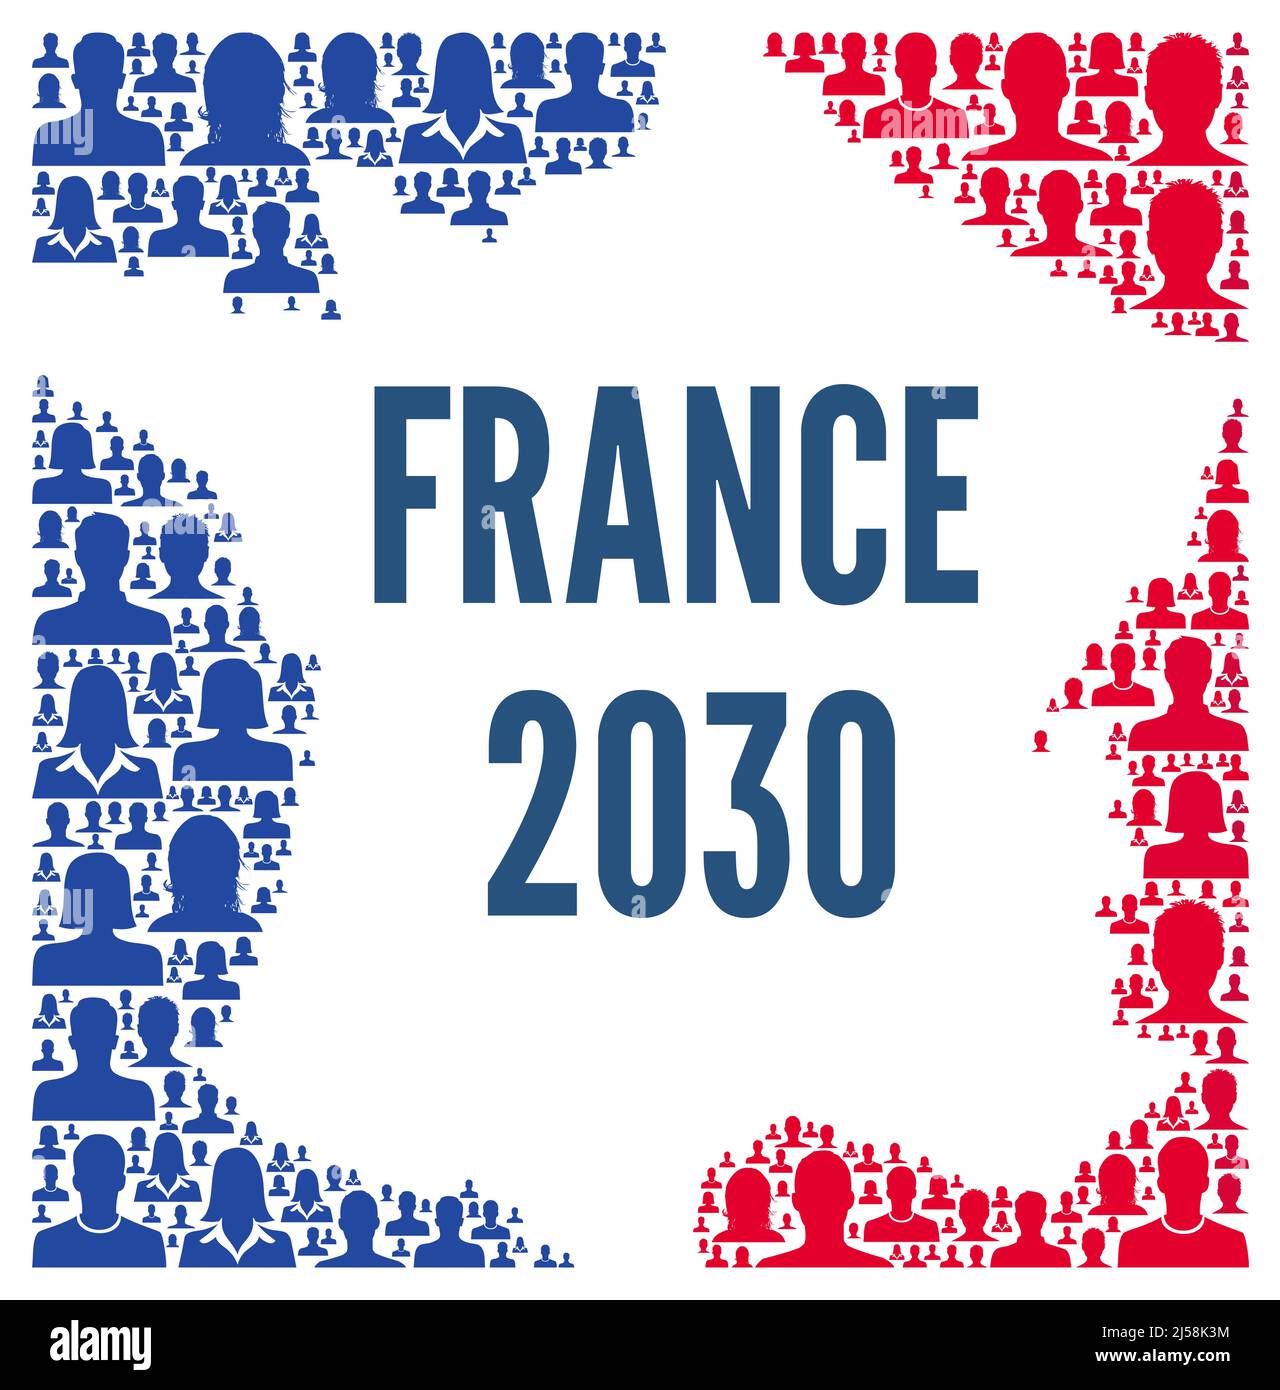 France 2030 investment plan symbol illustration Stock Photo